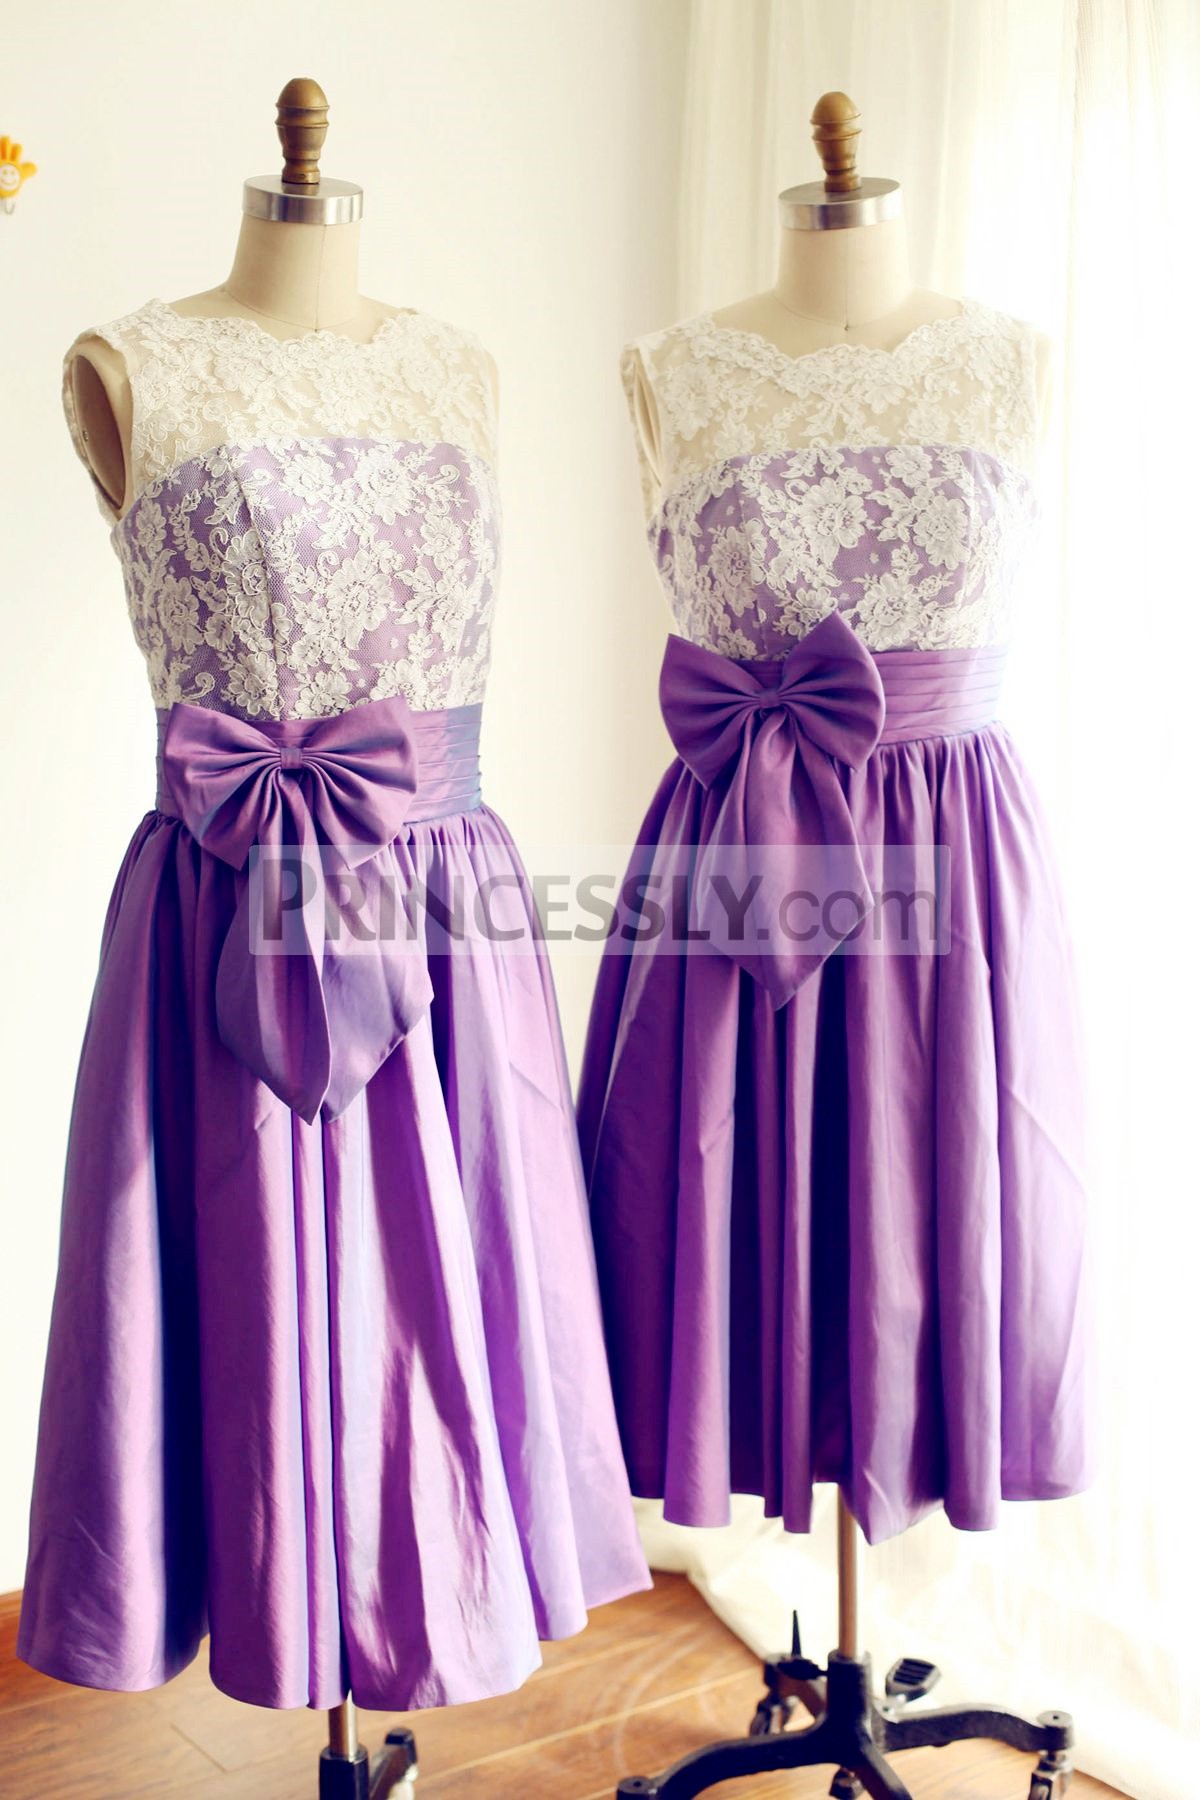 Princessly.com-K1000222-V Back Ivory Lace /Purple Taffeta Tea Length Short Bridesmaid Dress-31